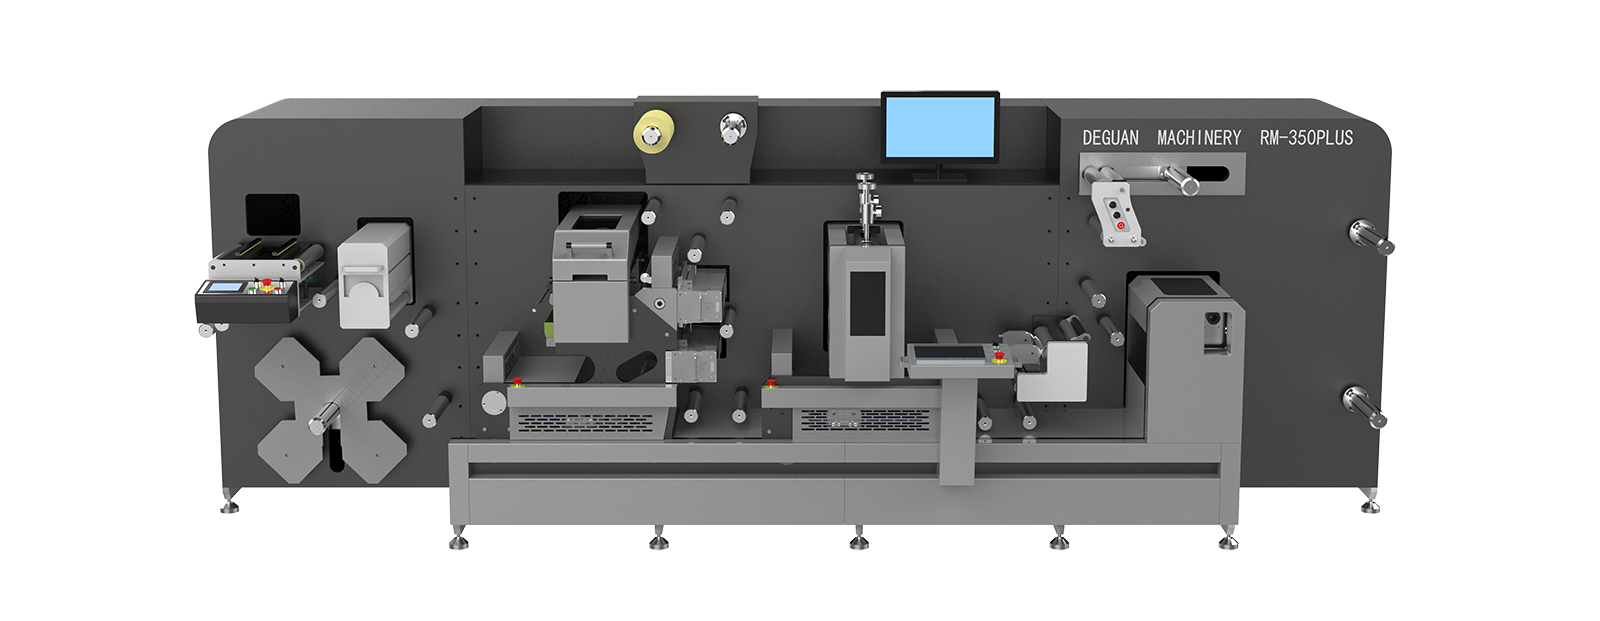 Modular machine batch printing die - cutting